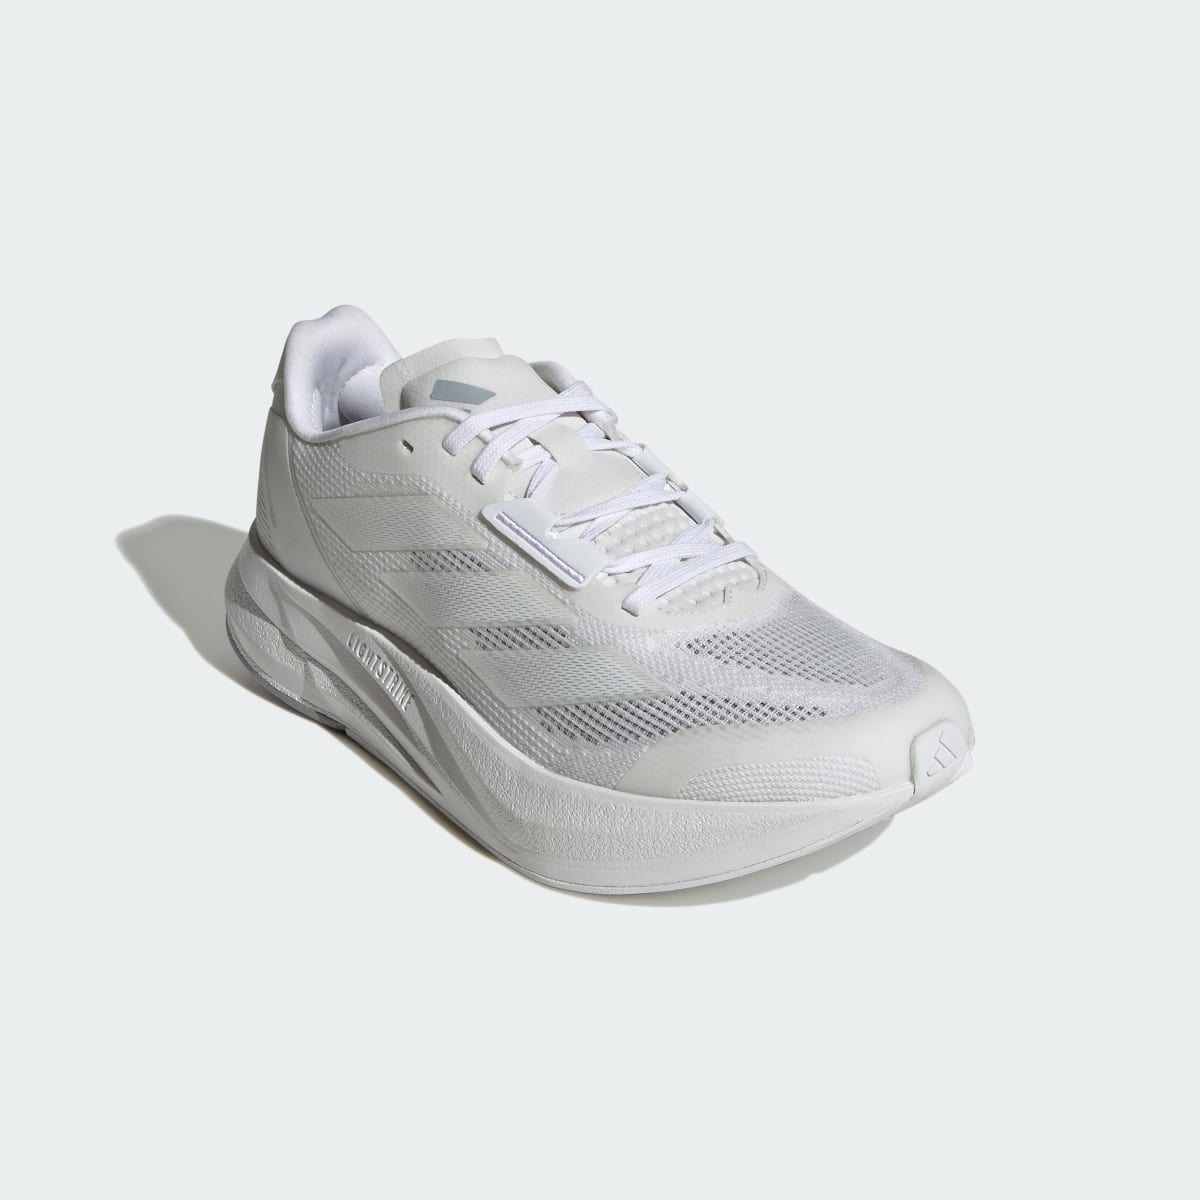 Adidas Duramo Speed Running Shoes. 5